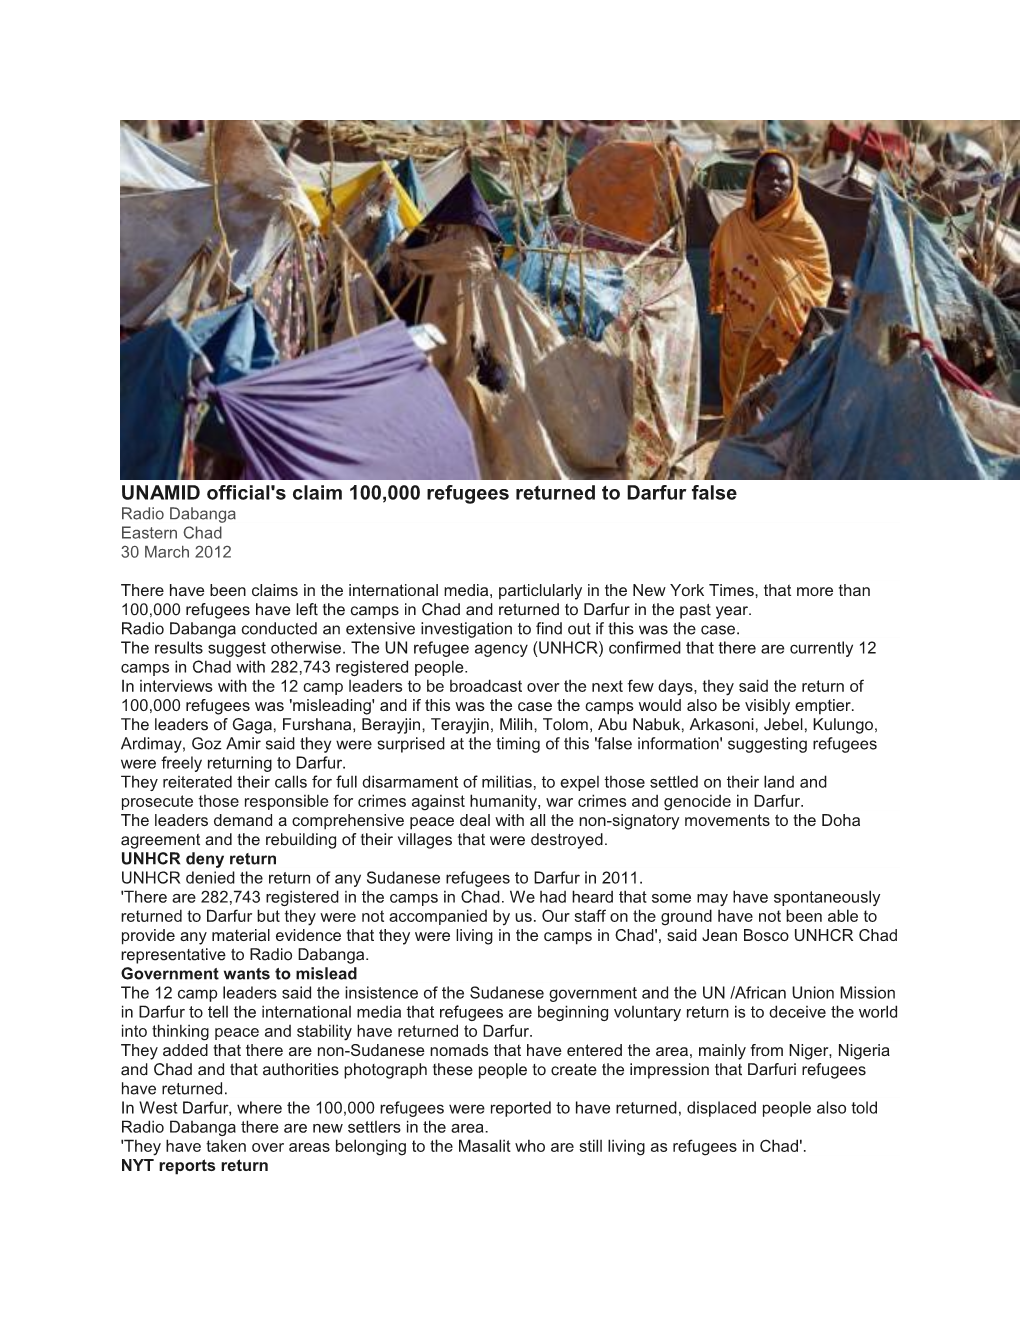 UNAMID Official's Claim 100,000 Refugees Returned to Darfur False